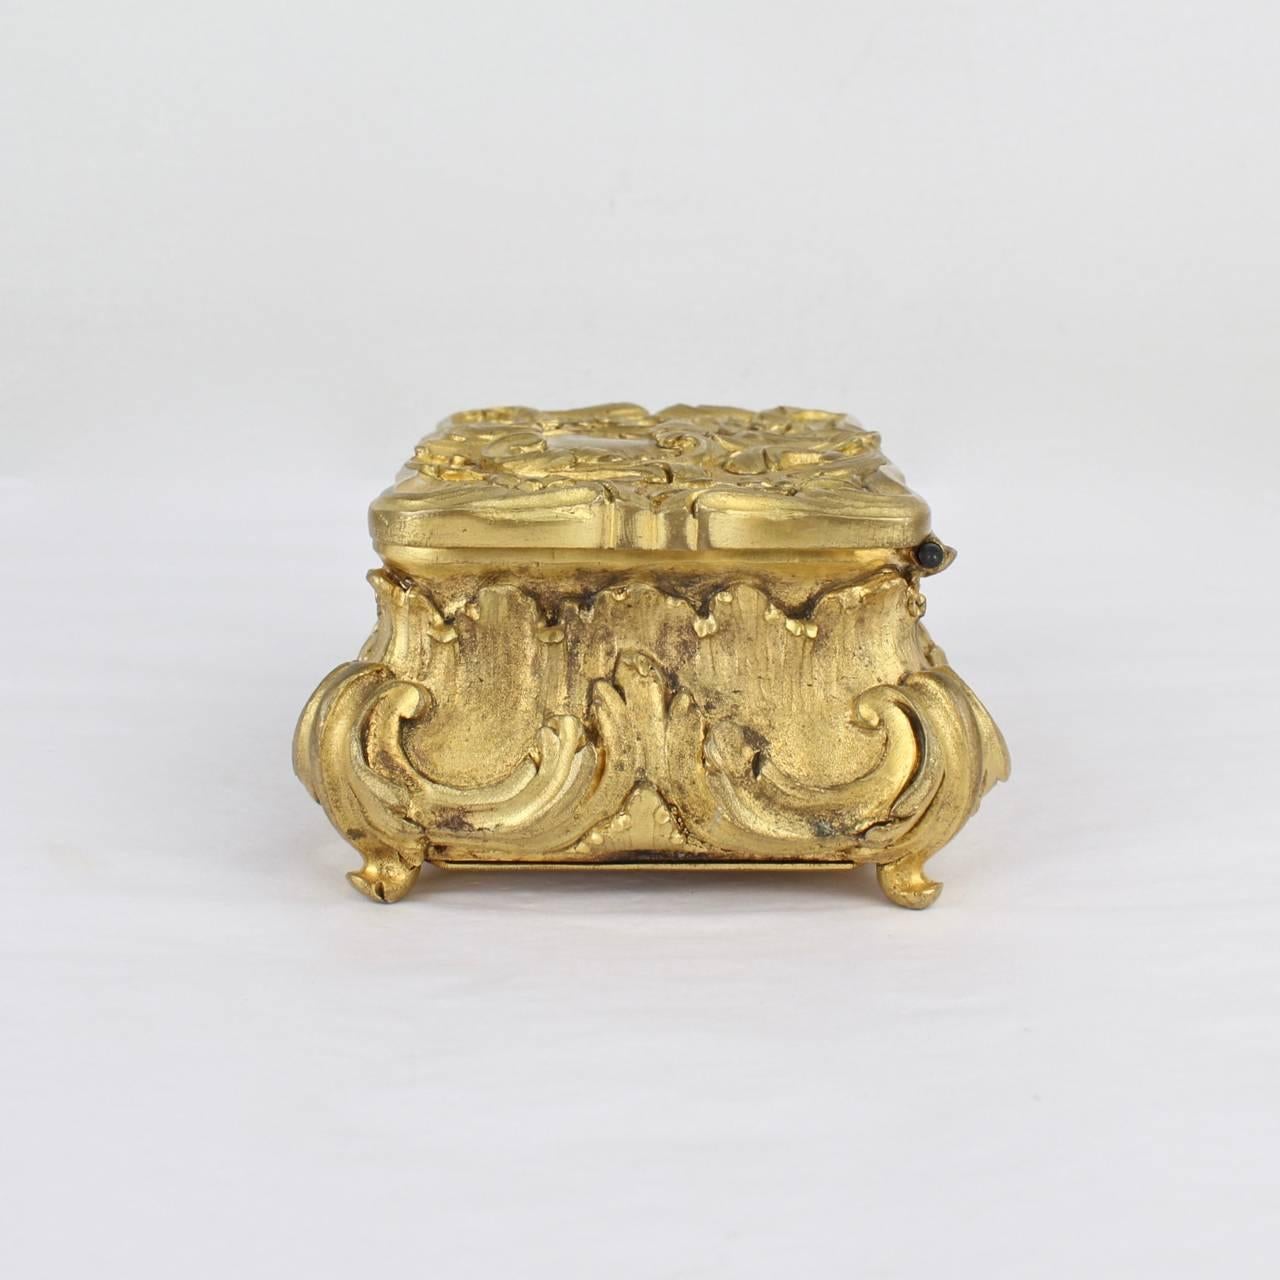 Antique Small Doré Gilt Bronze Table Box or Casket, 19th Century (Französisch)